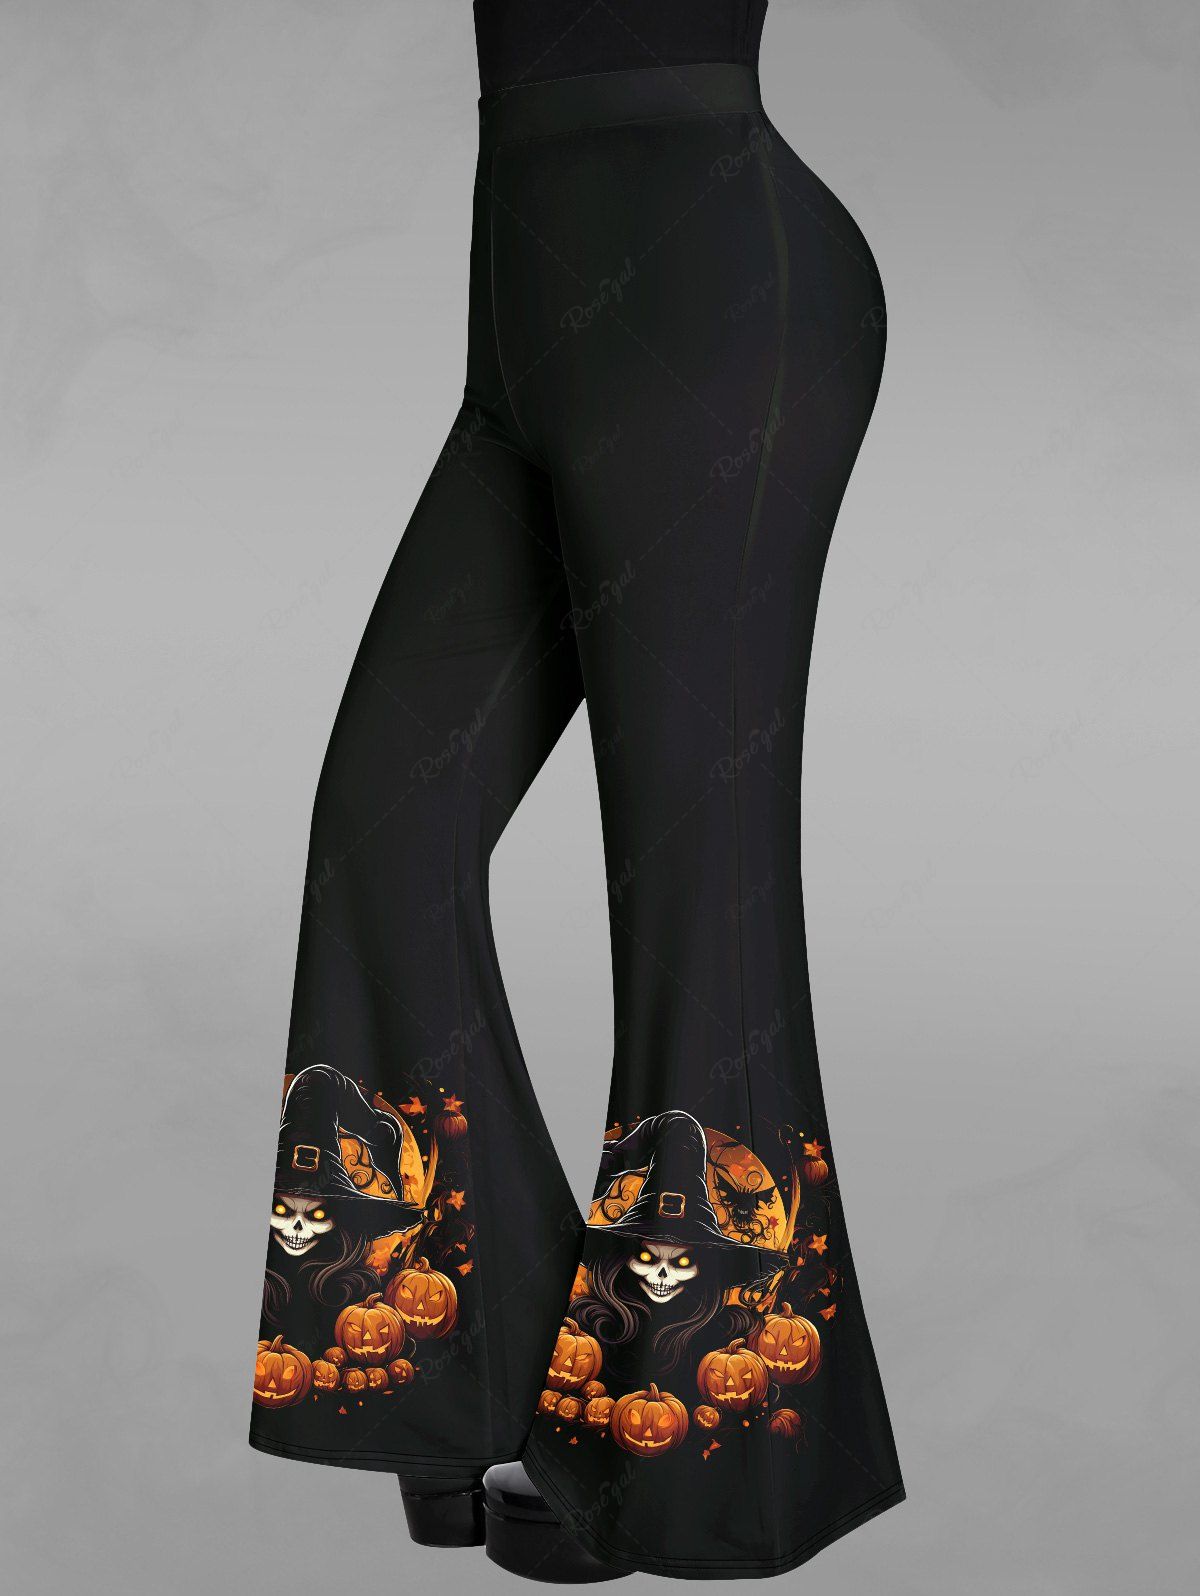  Women's Halloween 3D Printing Spider Leggings, Pumpkin